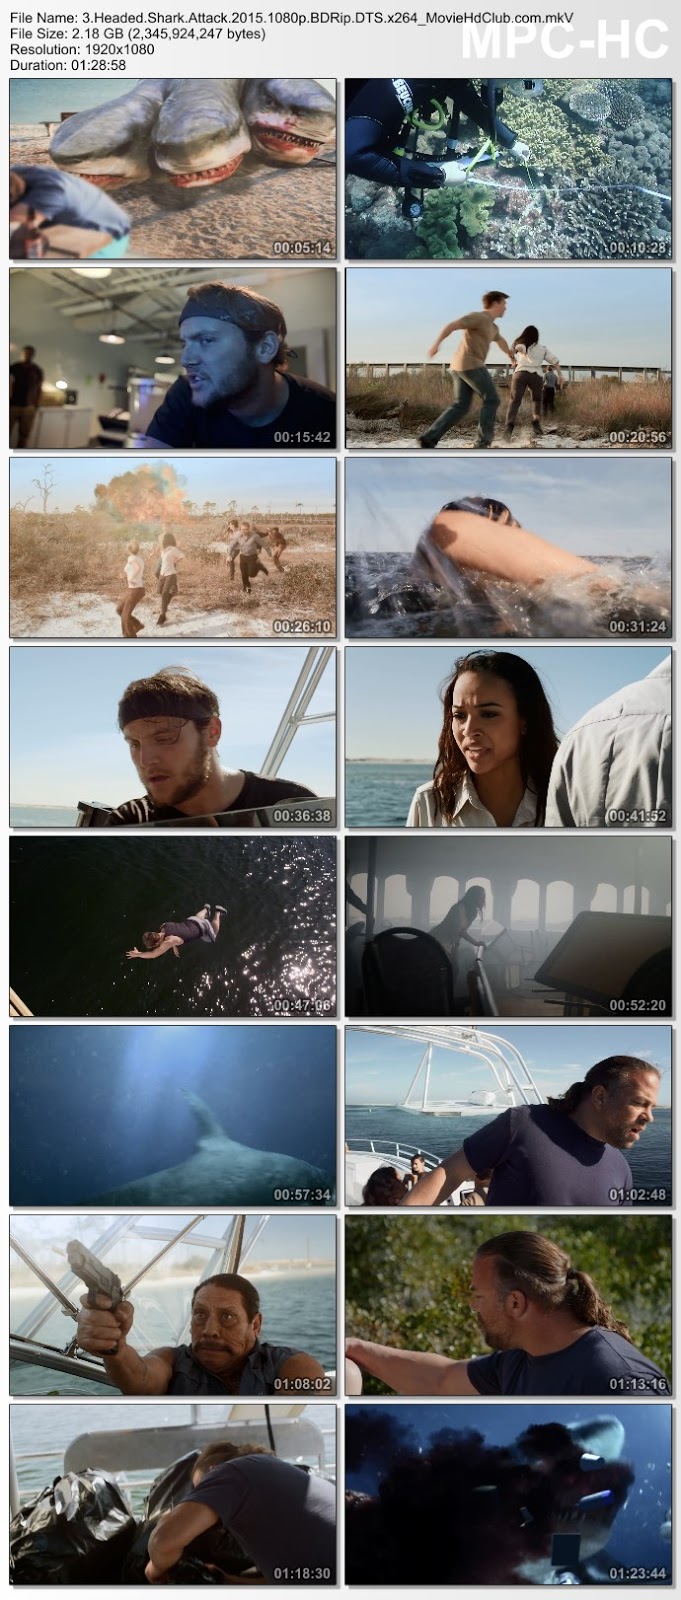 [Mini-HD] 3 Headed Shark Attack (2015) - โคตรฉลาม 3 หัวเพชฌฆาต [1080p][เสียง:ไทย 5.1/Eng DTS][ซับ:ไทย/Eng][.MKV][2.18GB] HS_MovieHdClub_SS